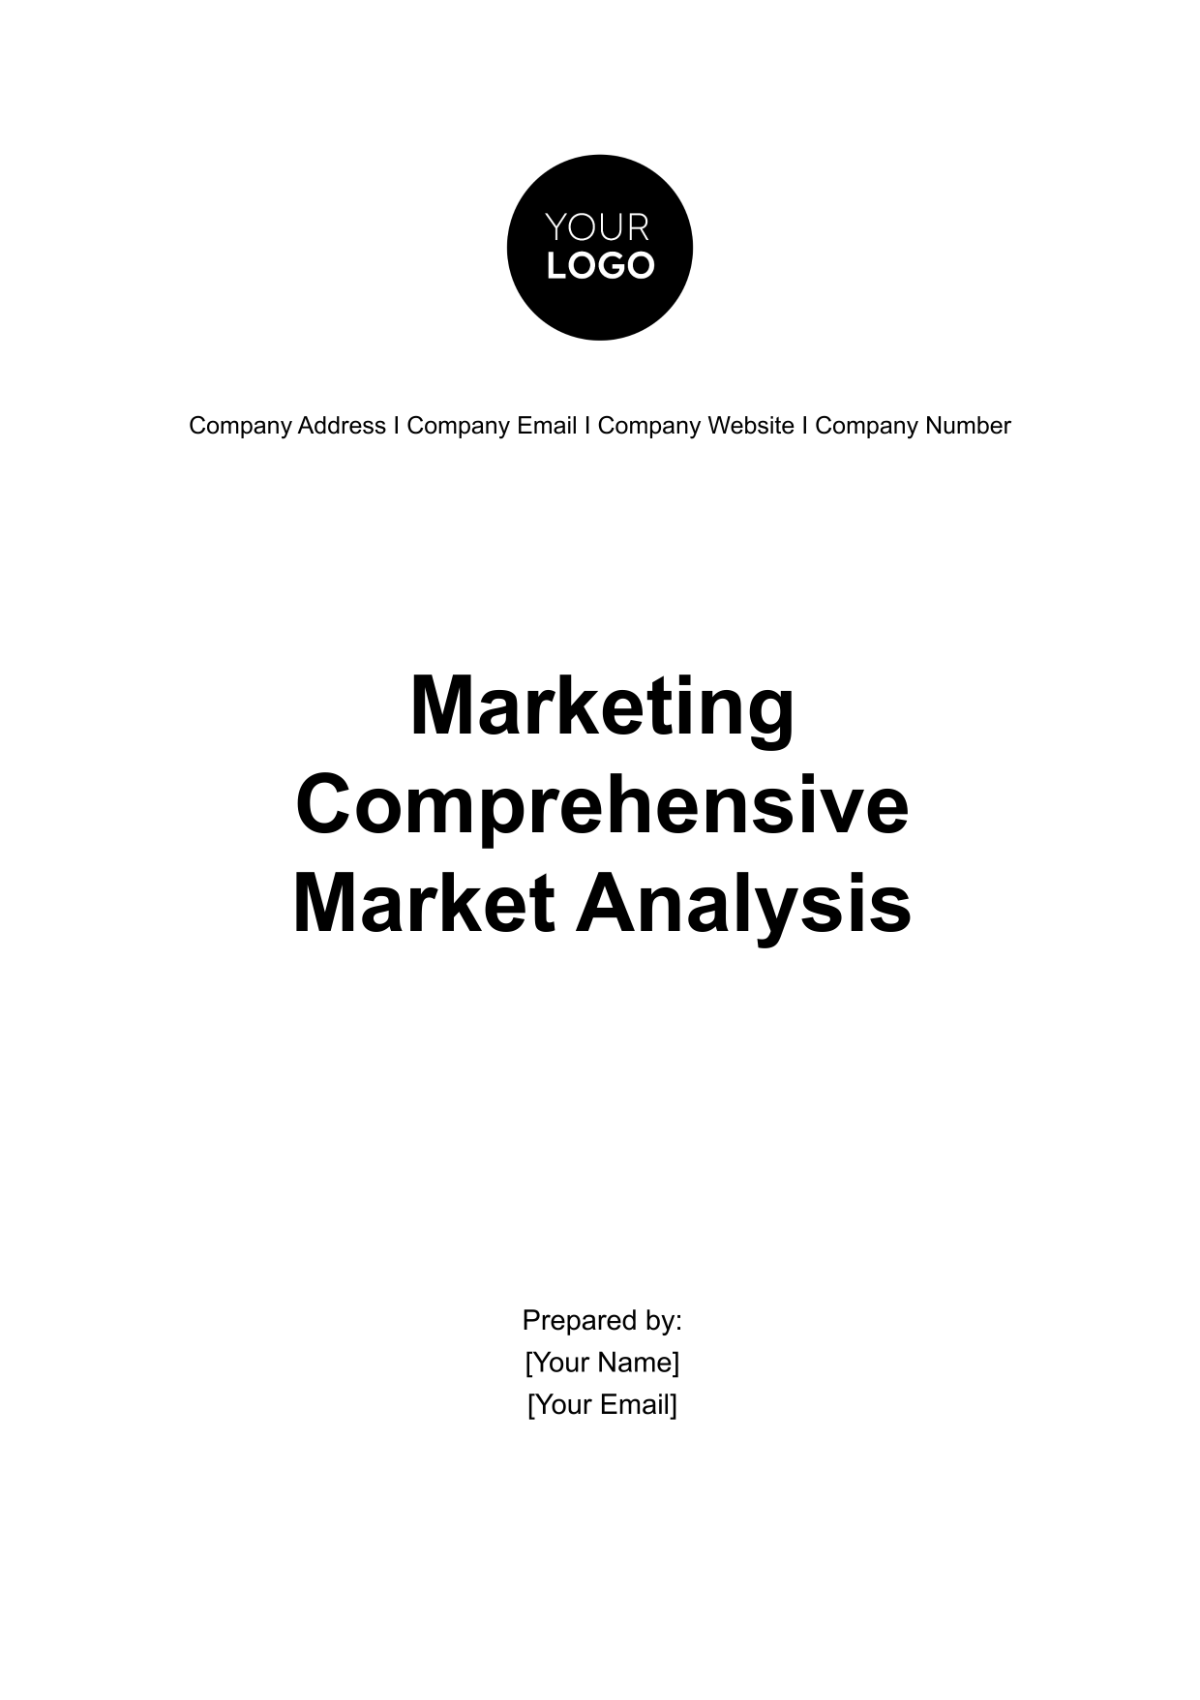 Marketing Comprehensive Market Analysis Template